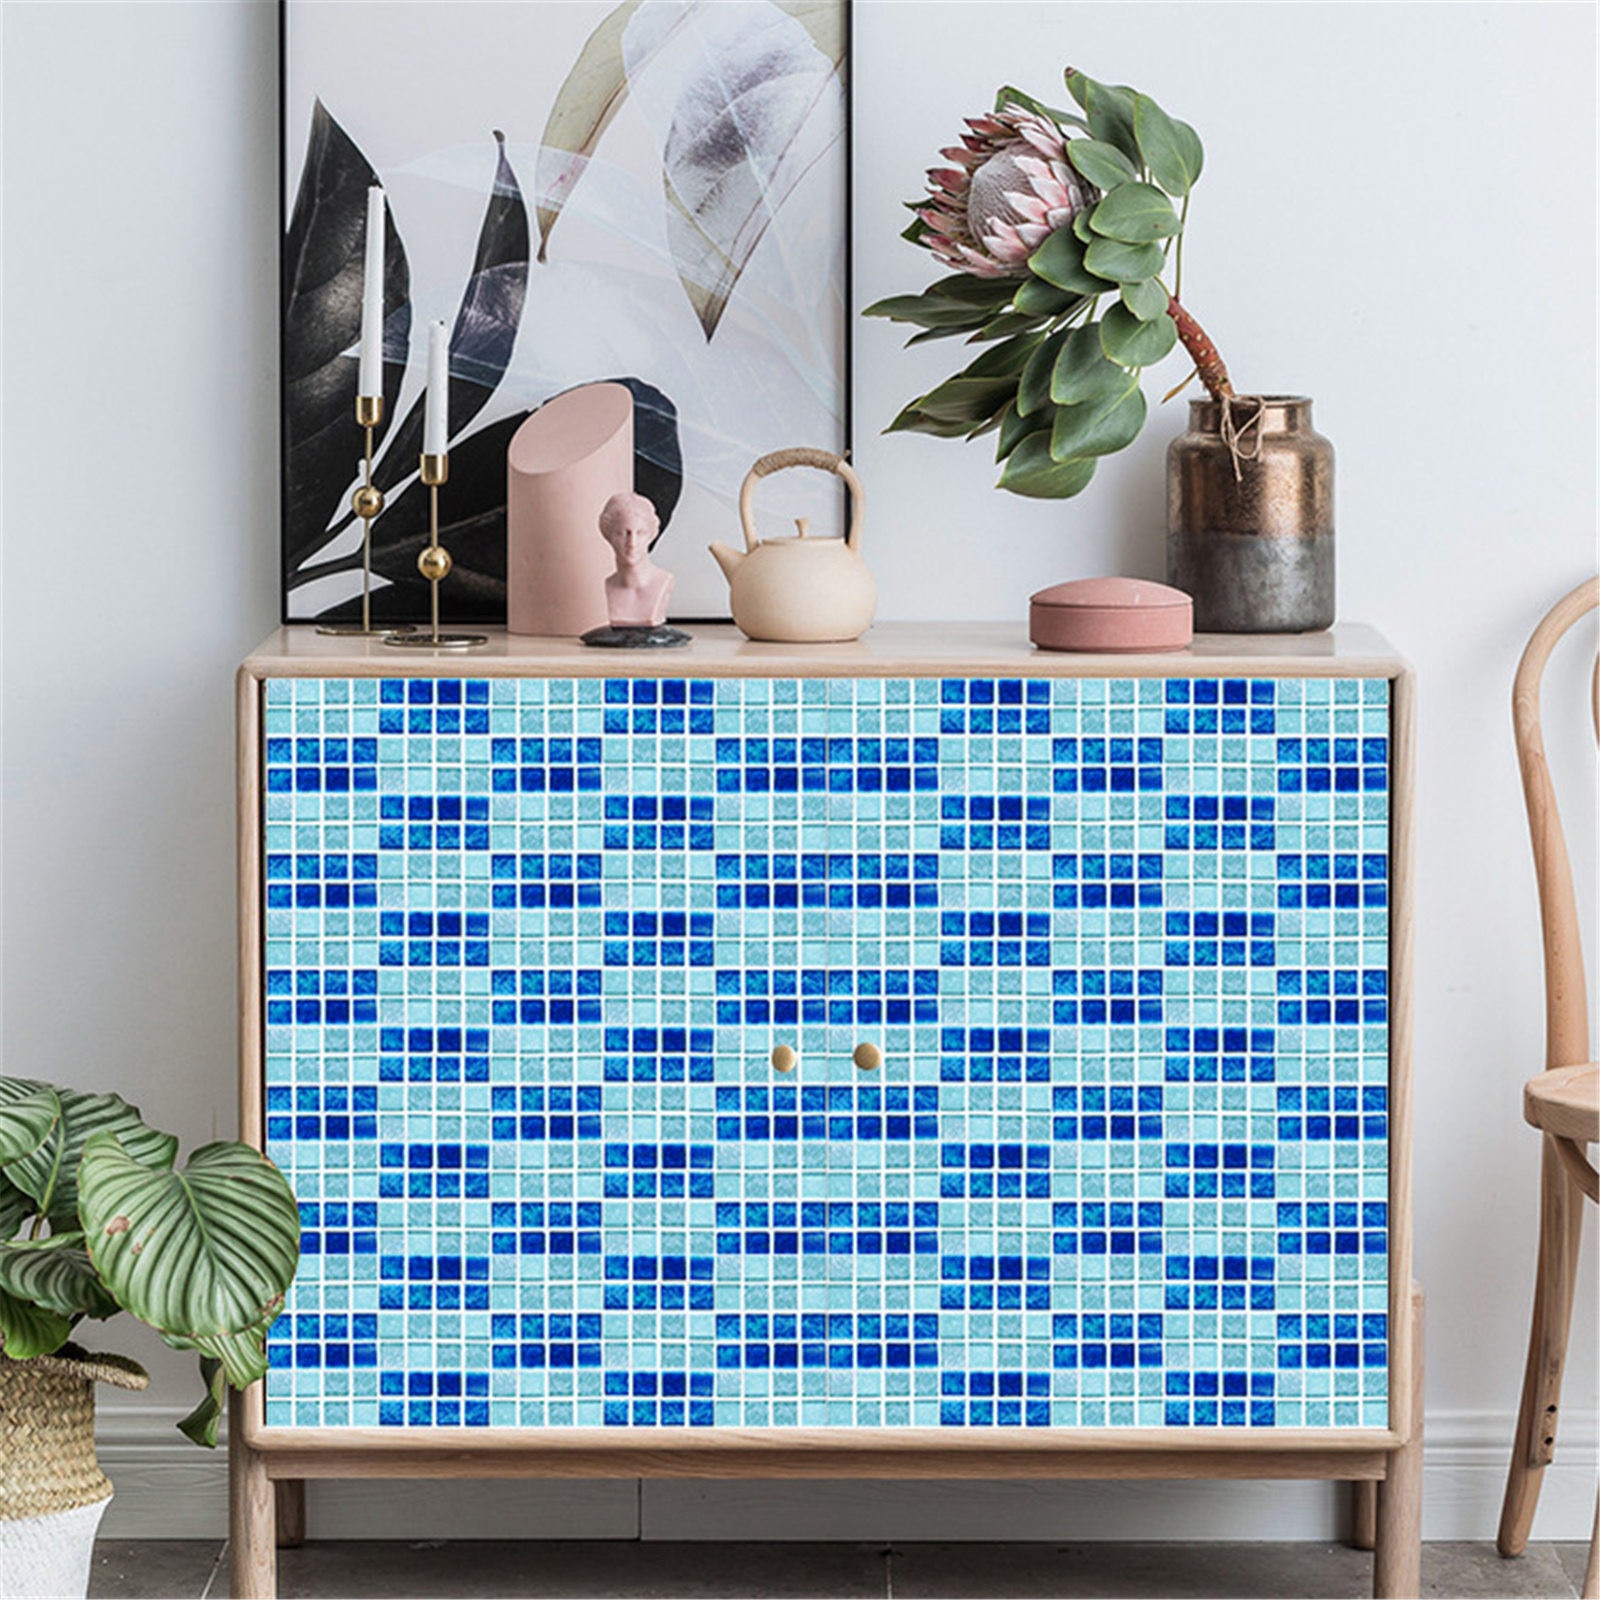 Waterproof Self Adhesive Vinyl Tile Wall Sticker DIY Peel and Stick Backsplash Kitchen Home Living Room TV Background Wall Decor